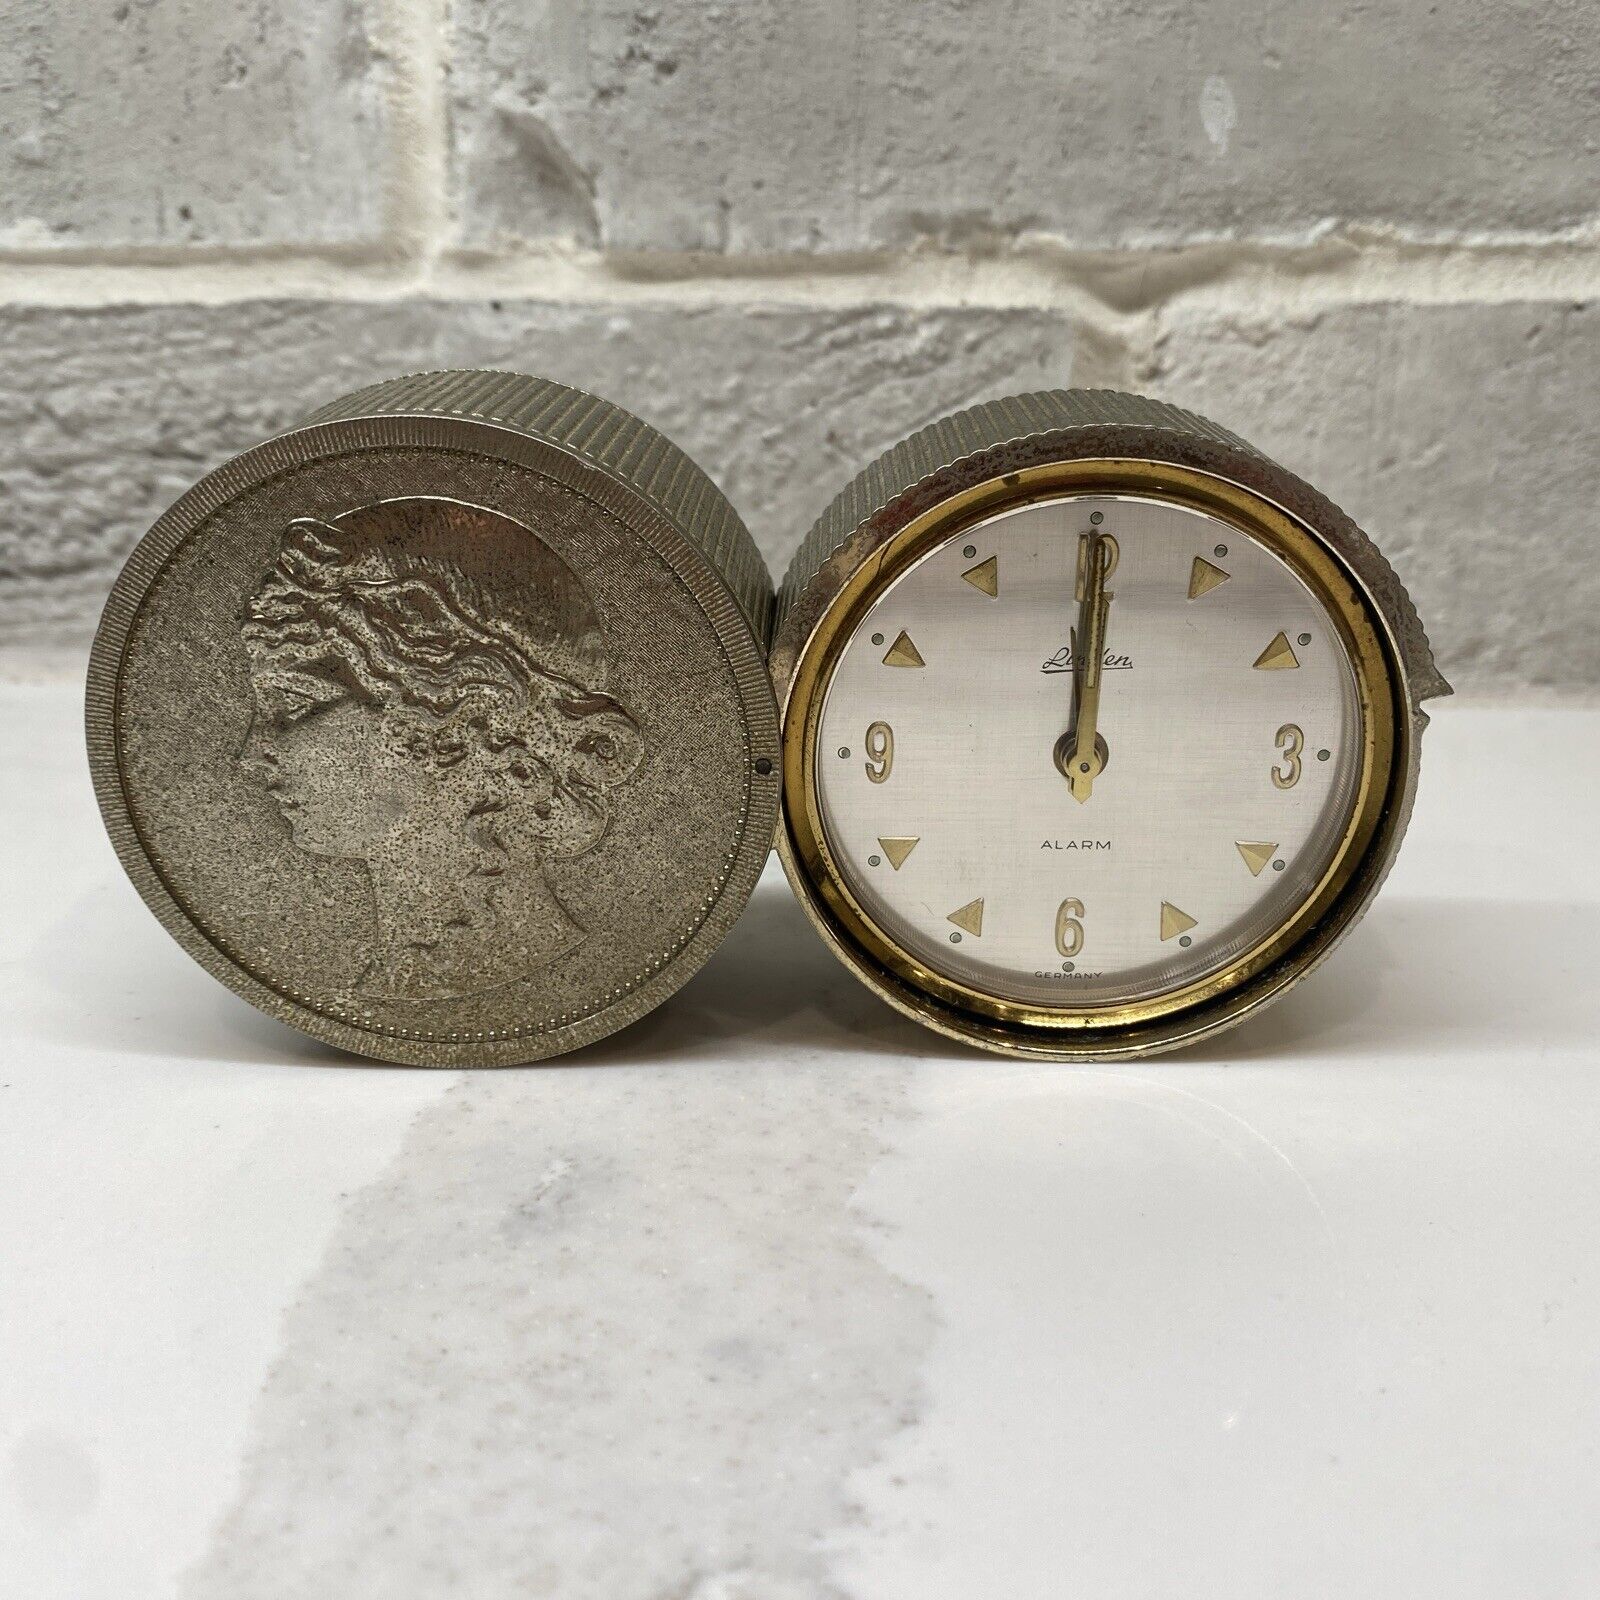 Linden Vintage Travel Alarm Clock Wind Up Gold Roman Coin Design Germany Made